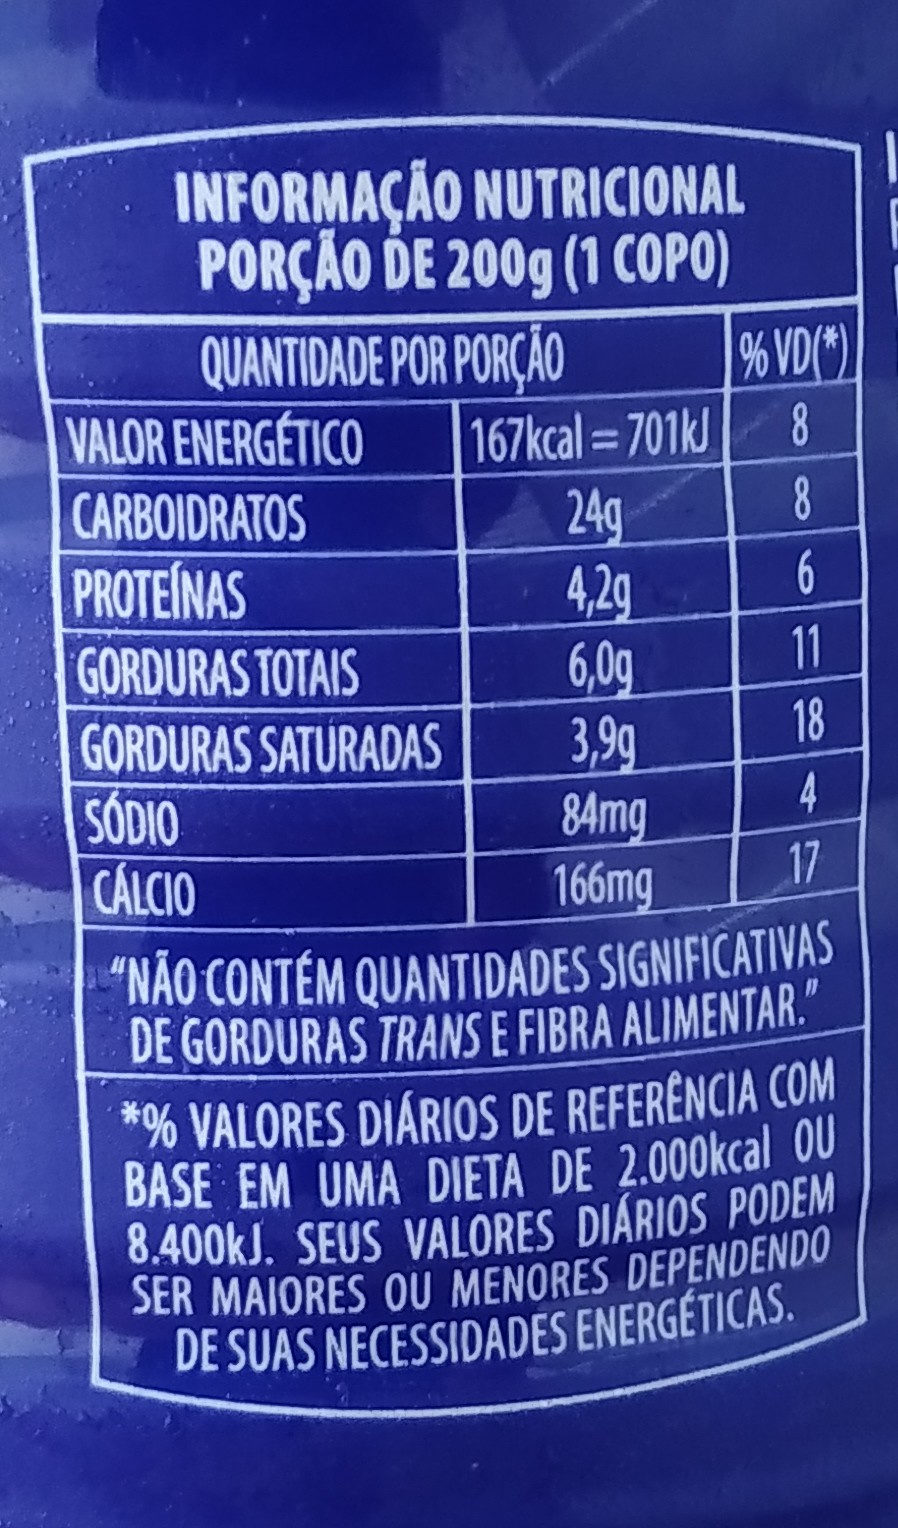 Iogurte Parcialmente Desnatado Morango Danone Garrafa 900g - Nutrition facts - pt